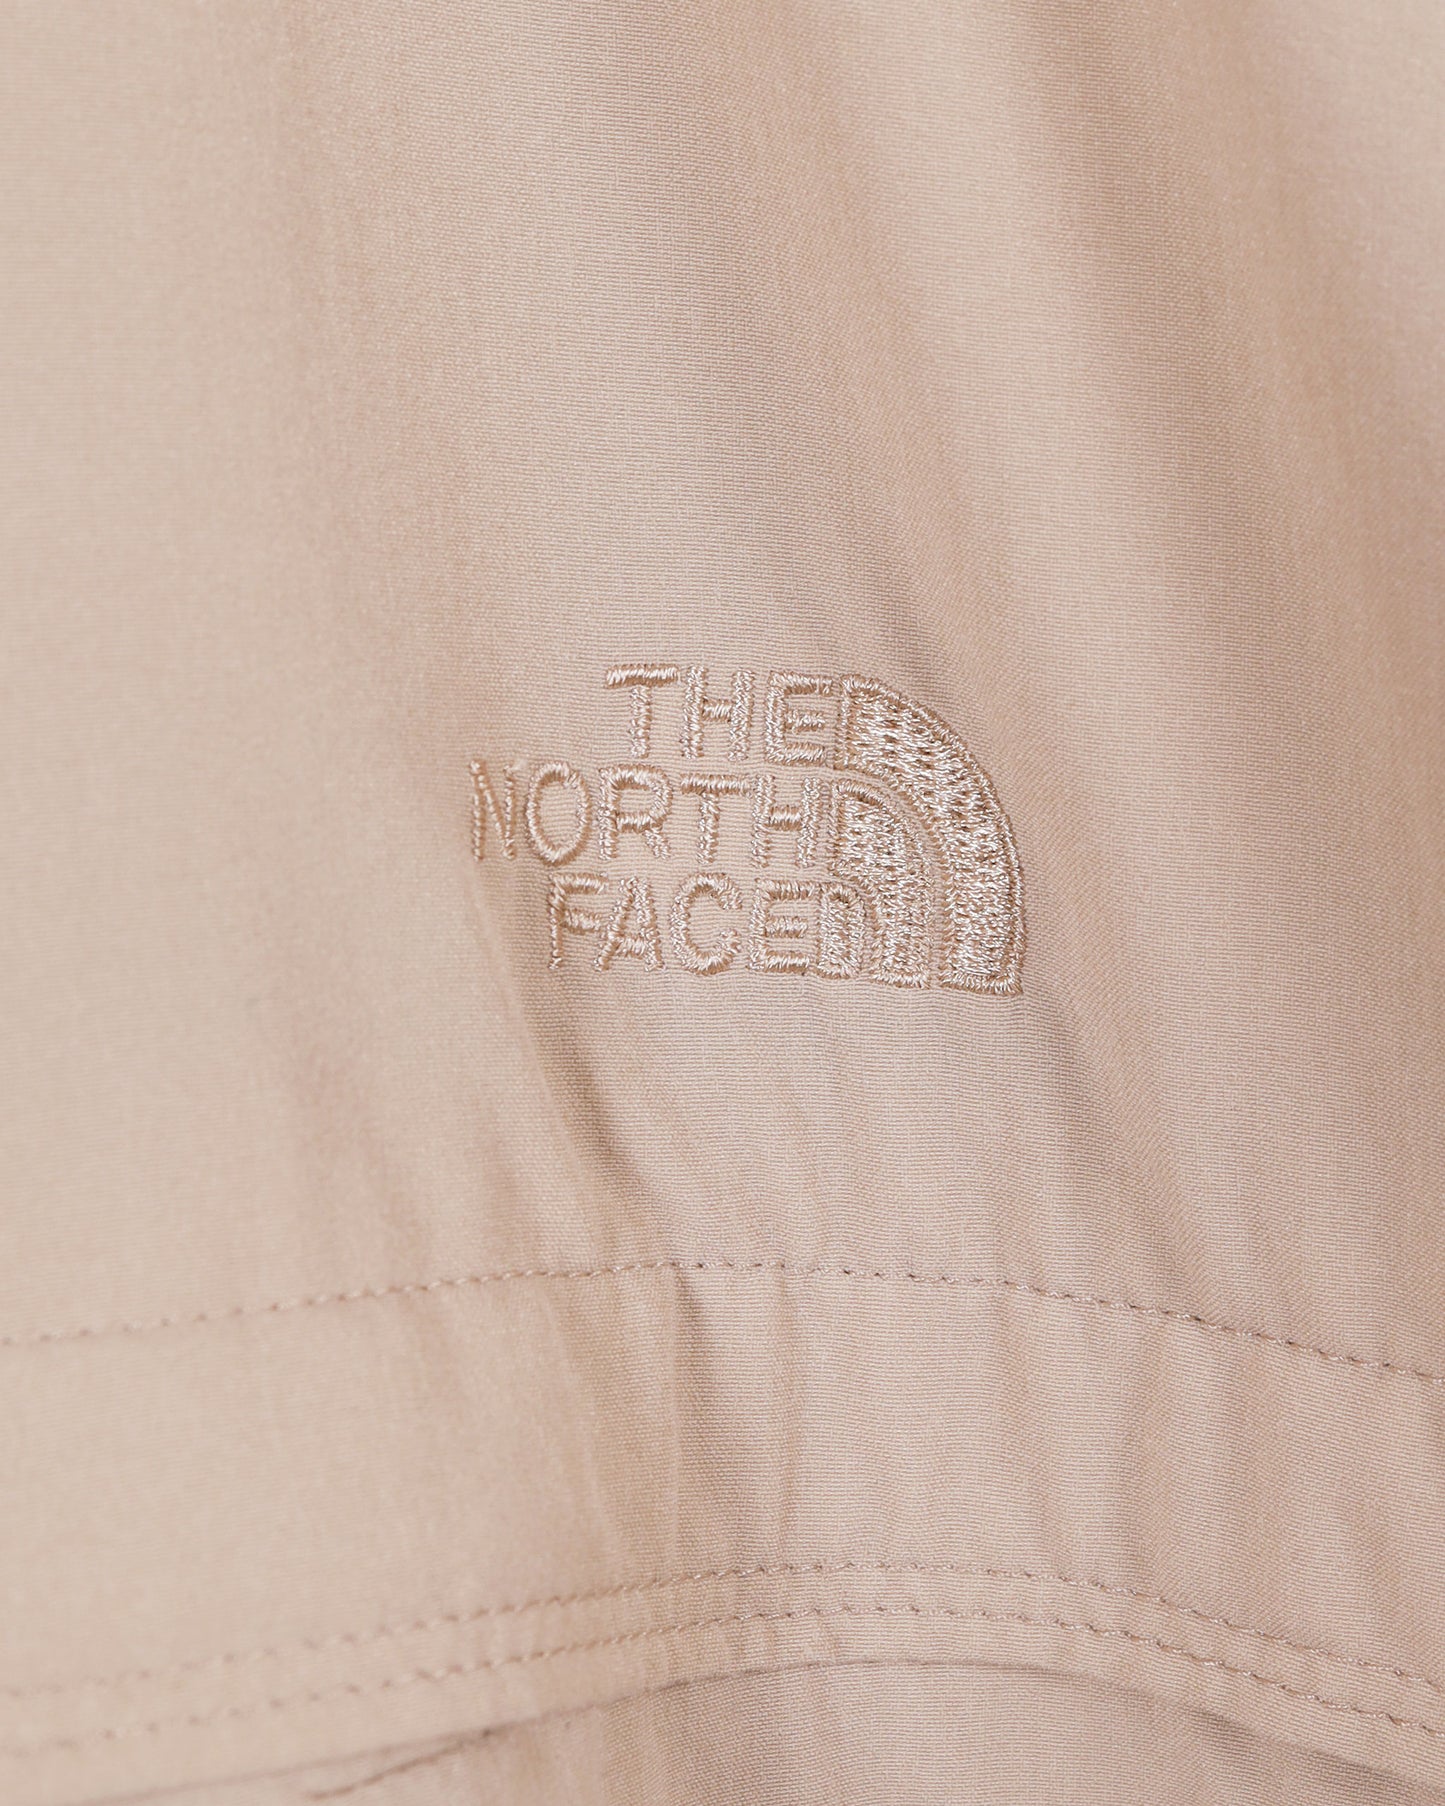 The North Face Summit Series Button Up Nylon Beige Lightweight Shirt Jacket XXL